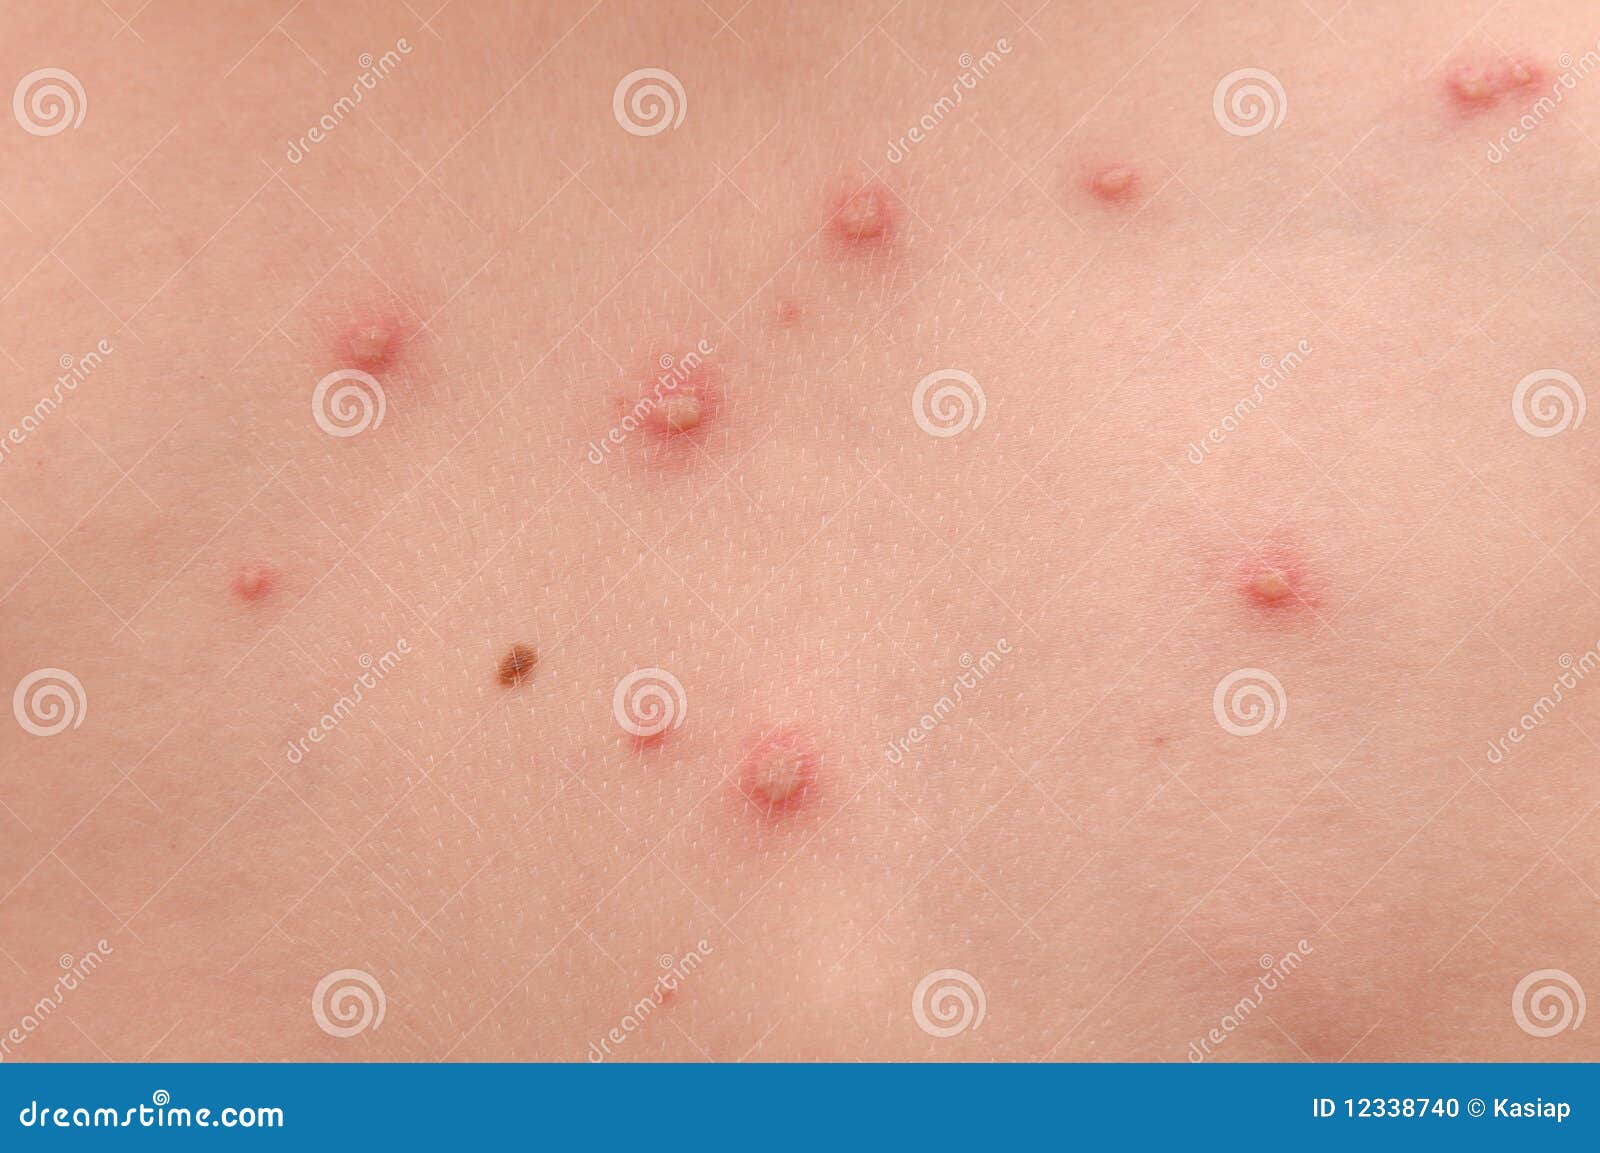 Heat rash pictures. What does heat rash look like in ...